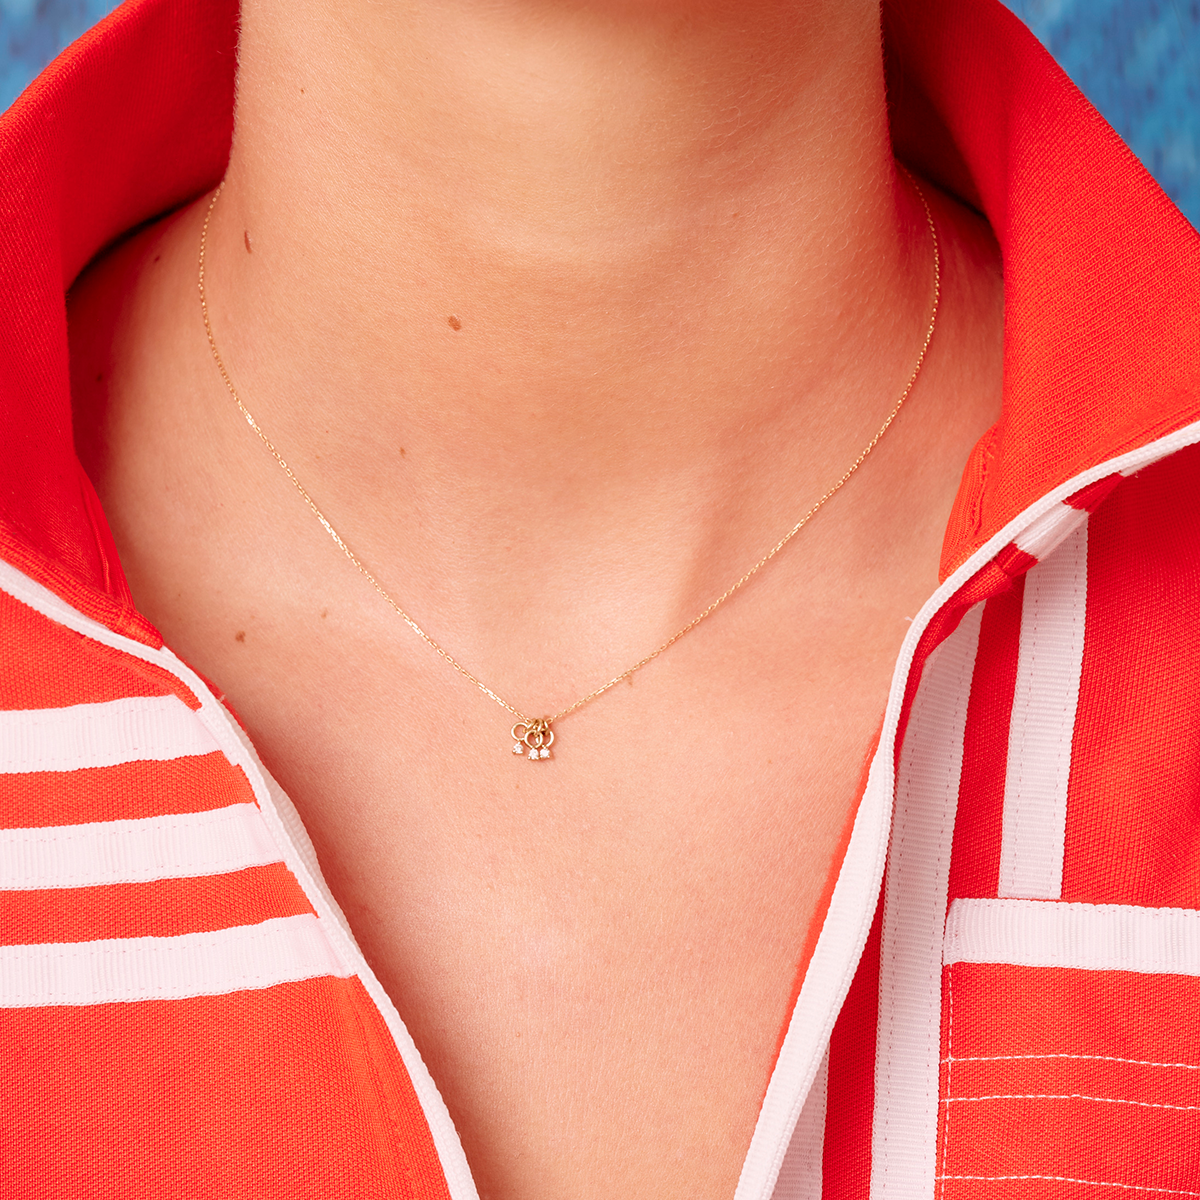 metier by tomfoolery Triple Petite Diamond Pendant shown on model wearing red sports top